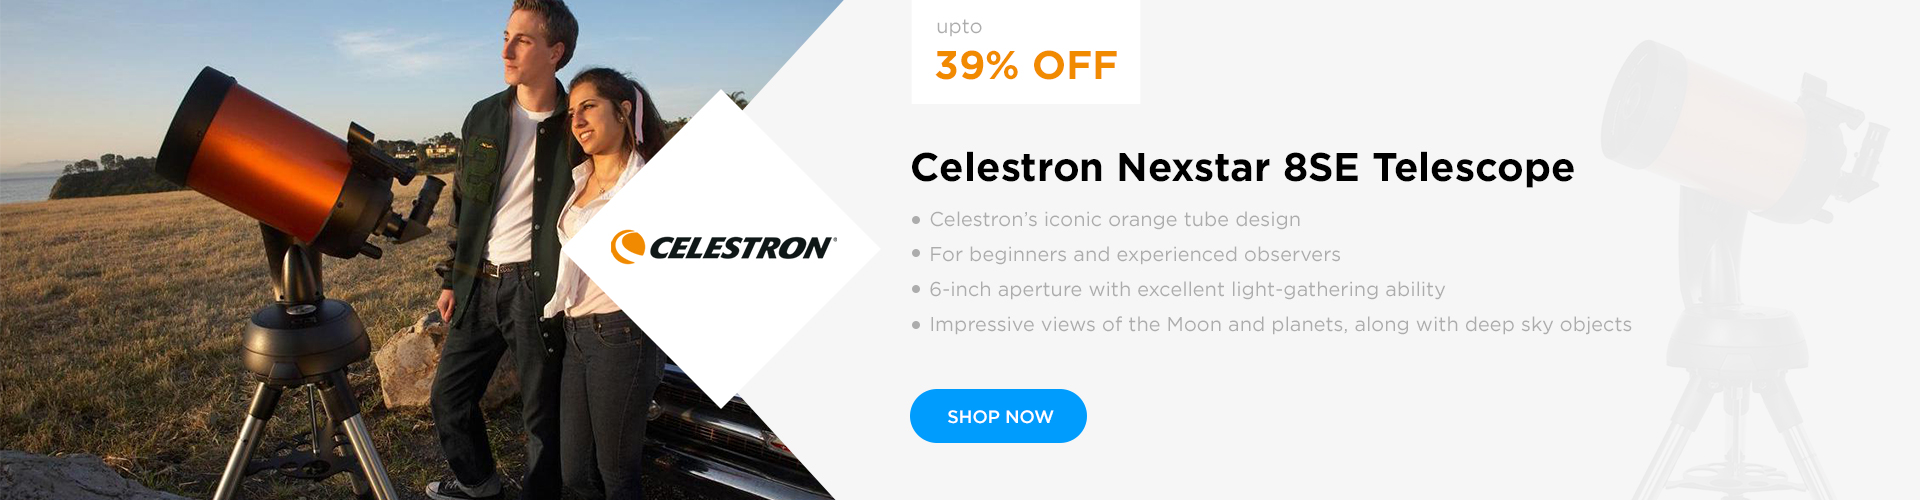 Celestron Nexstar 8SE Telescope